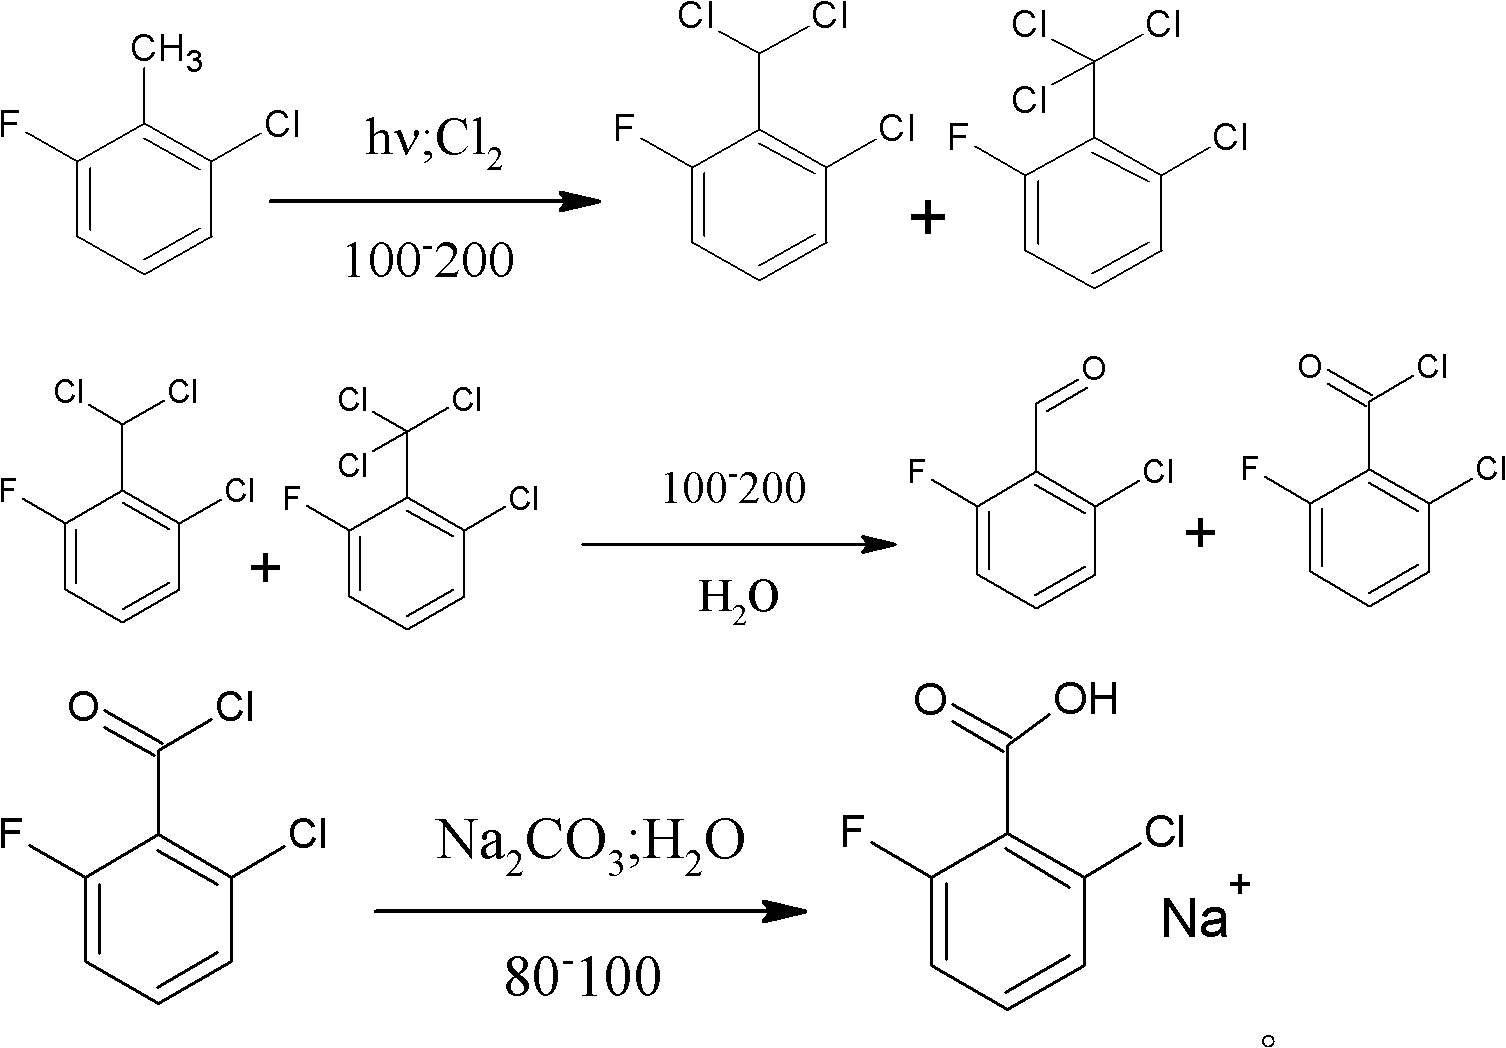 Method for preparing 2-chloro-6-fluorobenzaldehyde